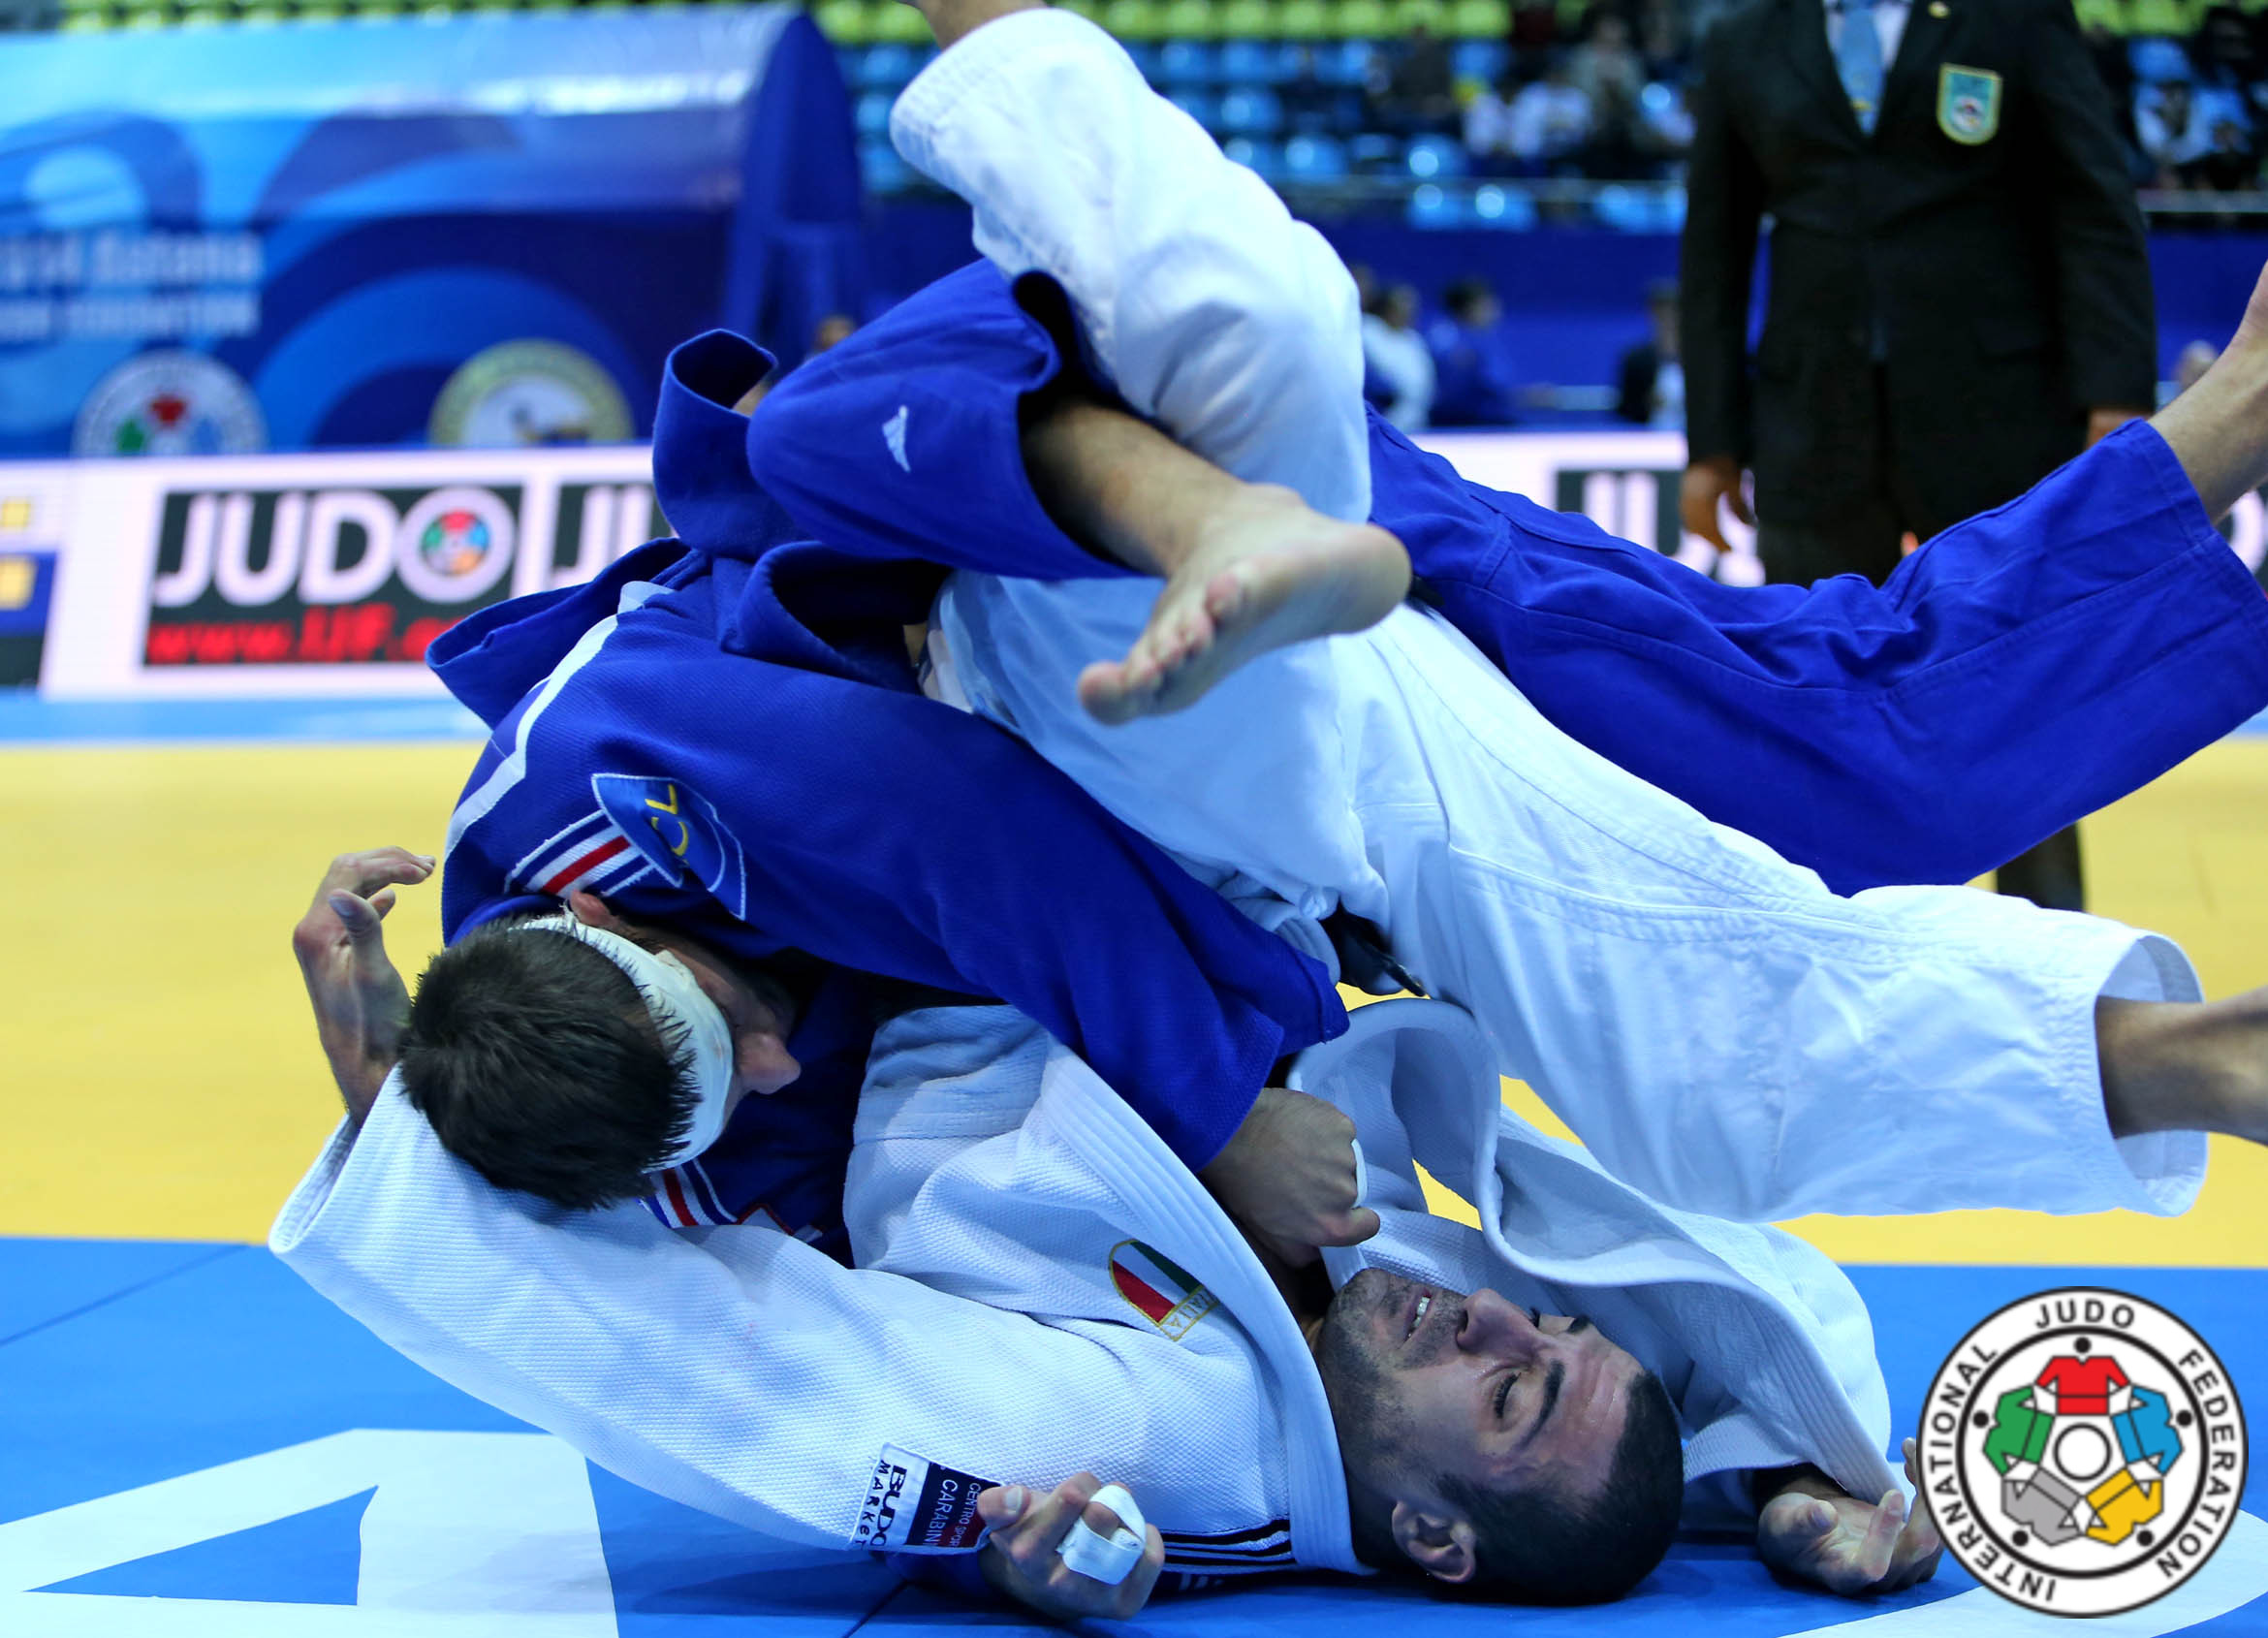 /immagini/Judo/2014/er_b28q2436.jpg